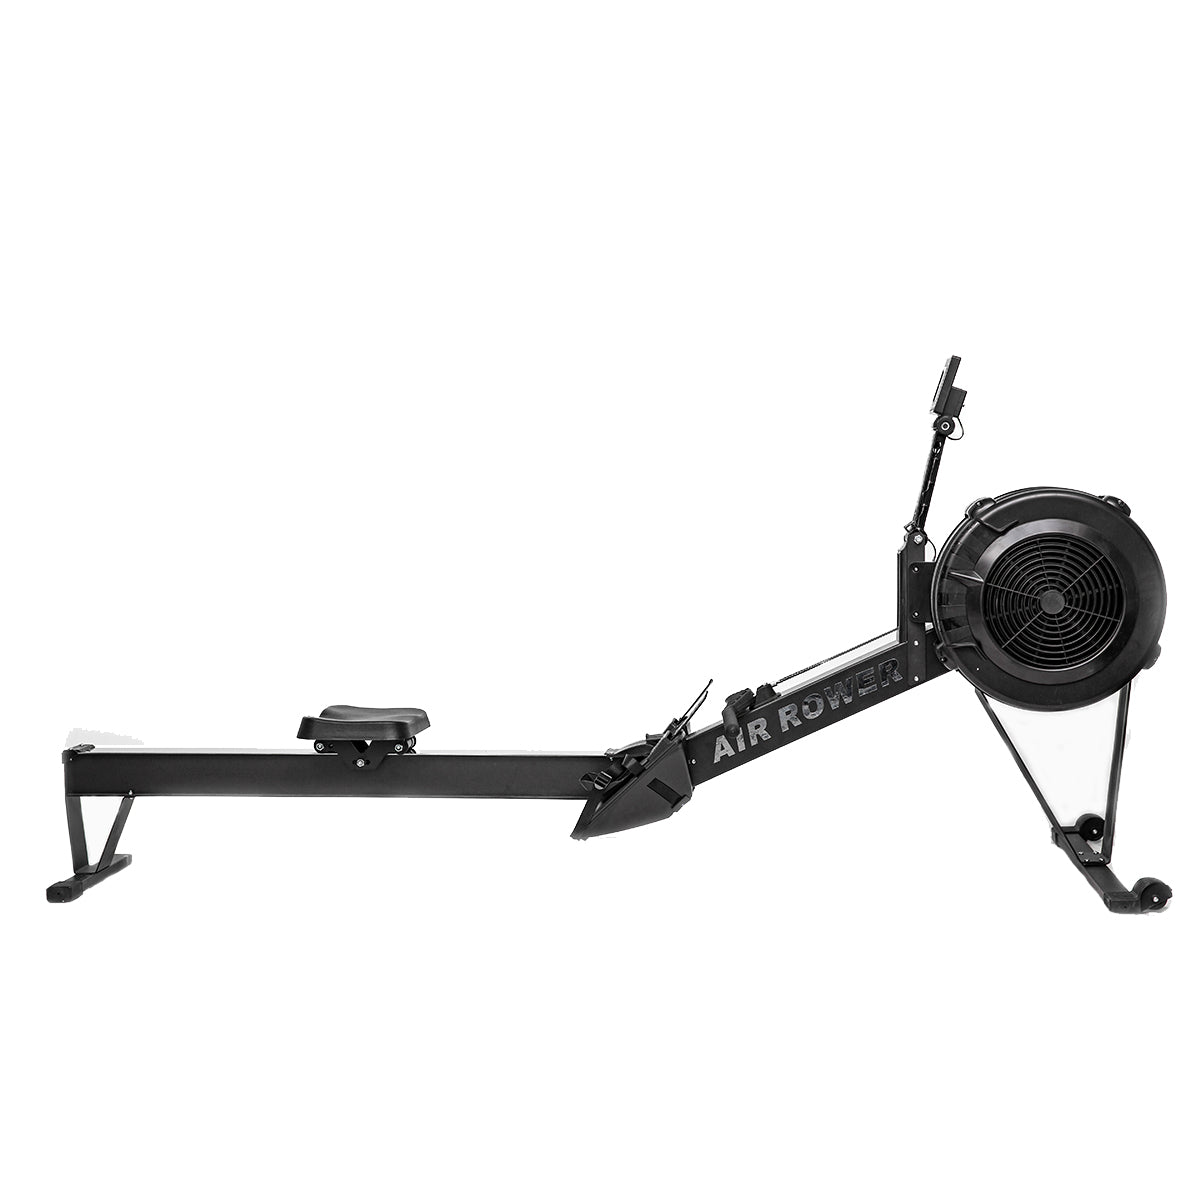 Air Rowing Machine Cardio Equipment